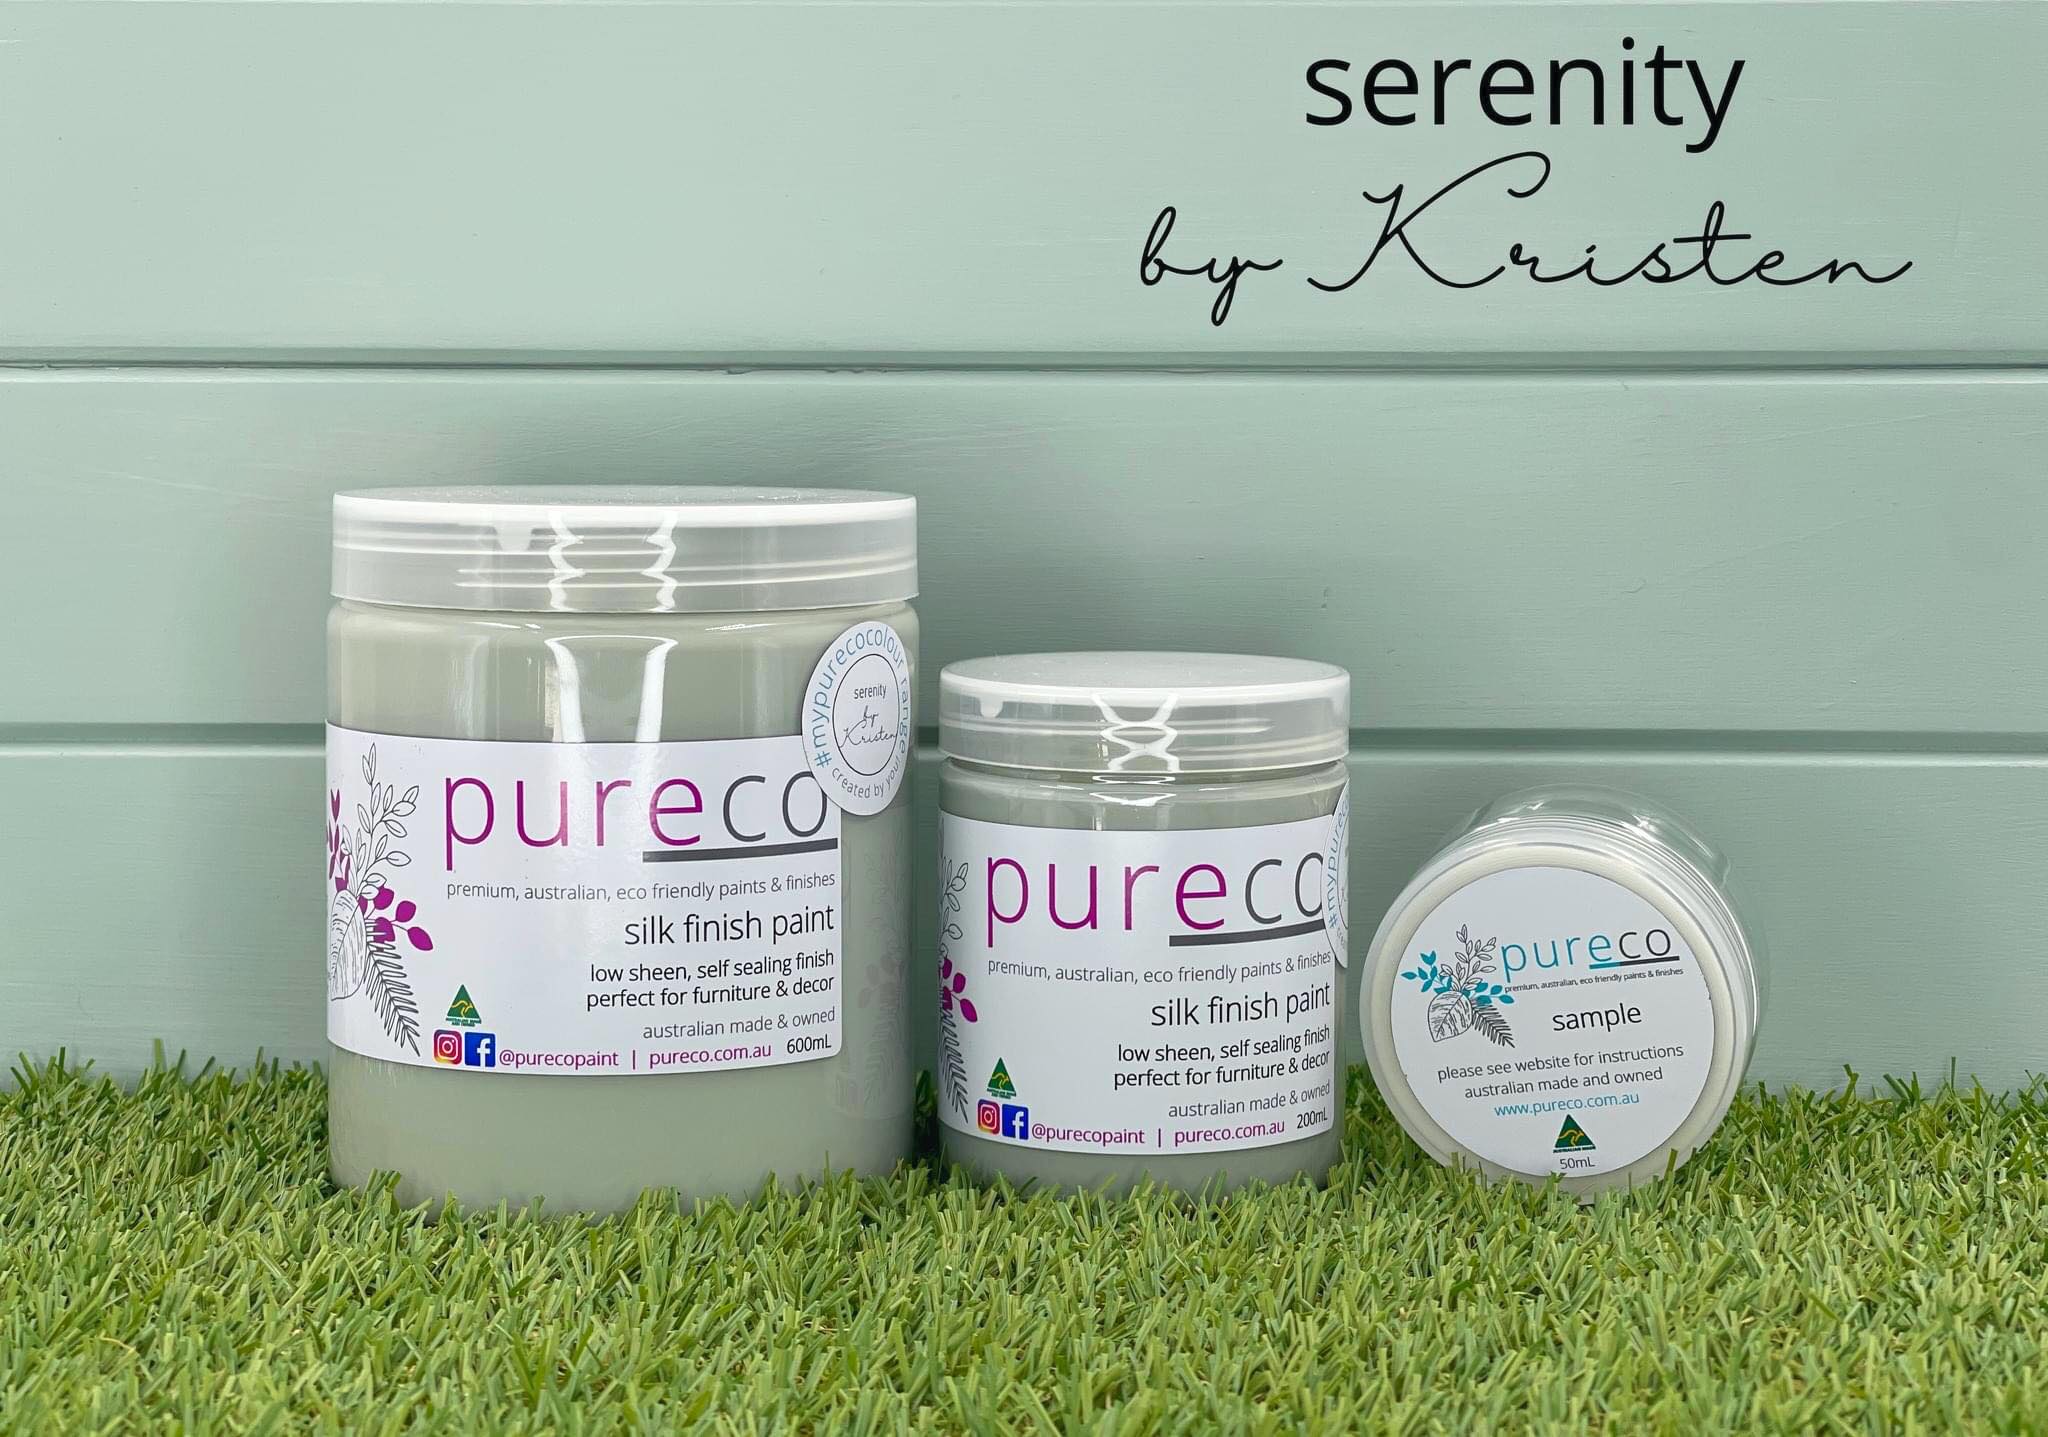 Pureco Silk Finish - Serenity by Kristen